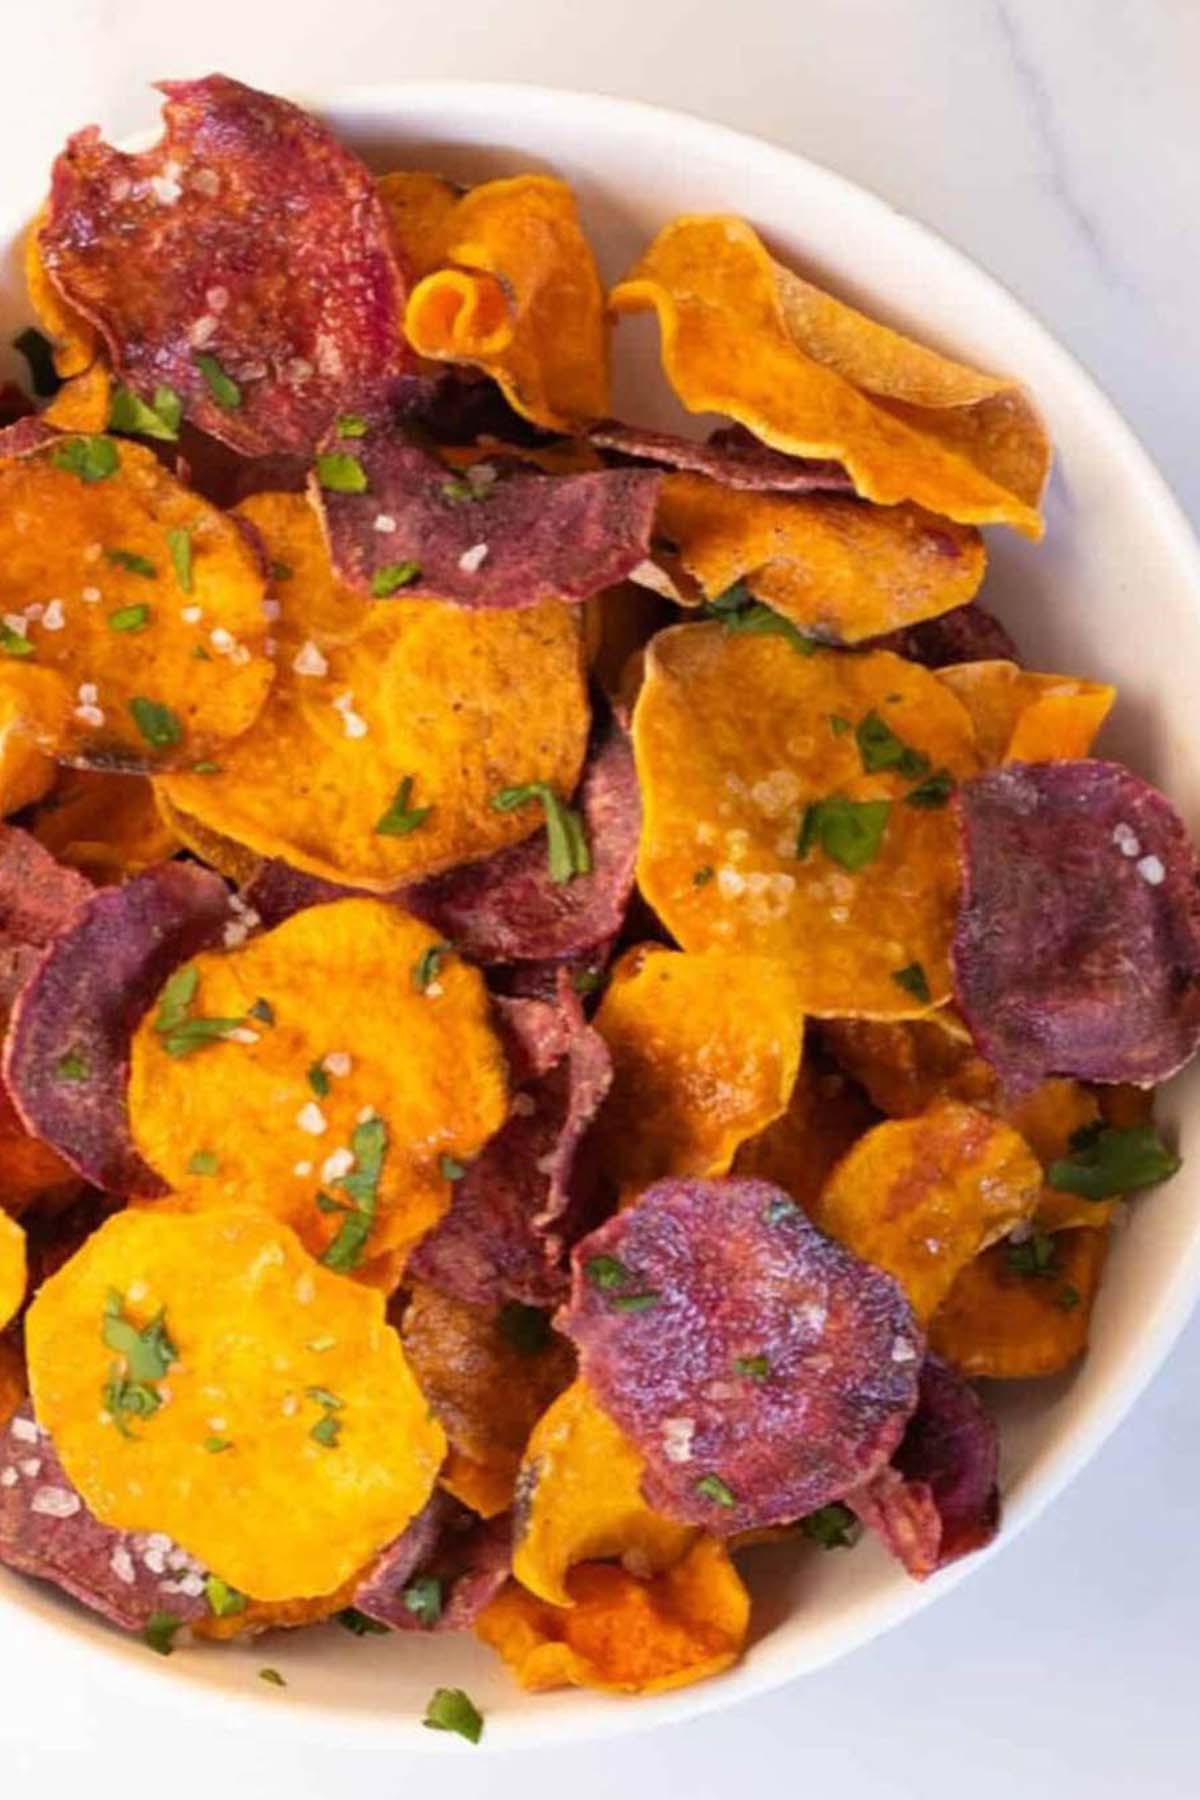 orange and purple sweet potato chips.